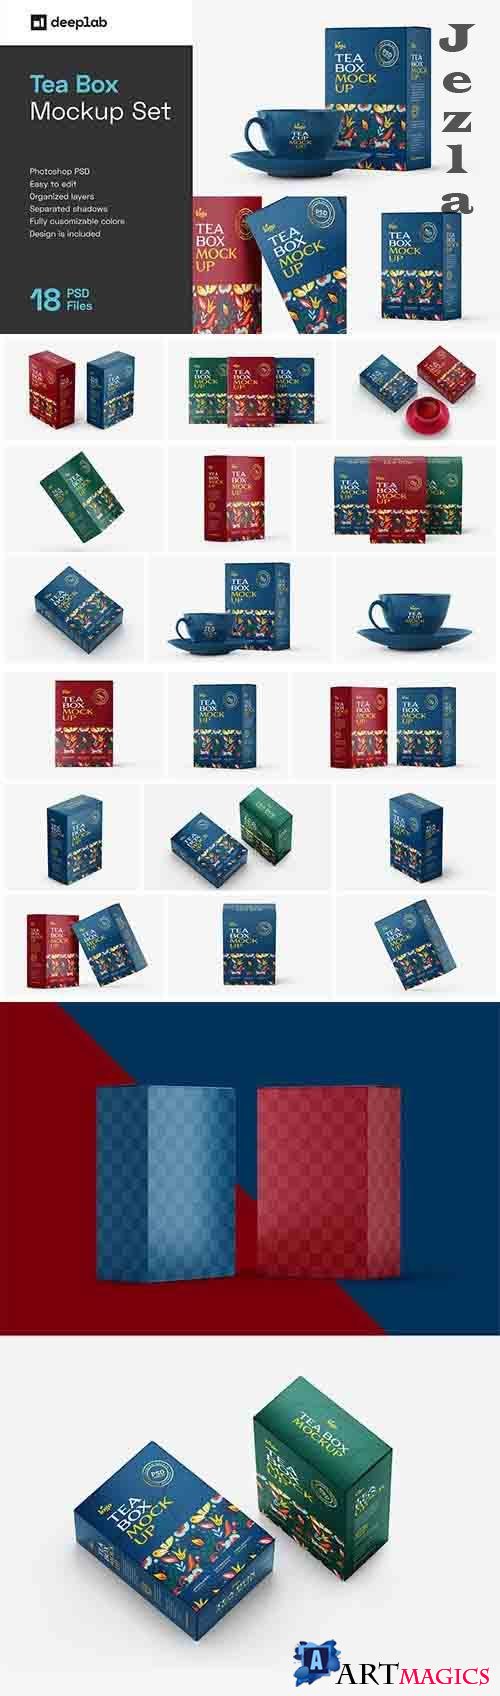 Tea Box Packaging Mockup Set - 5971990